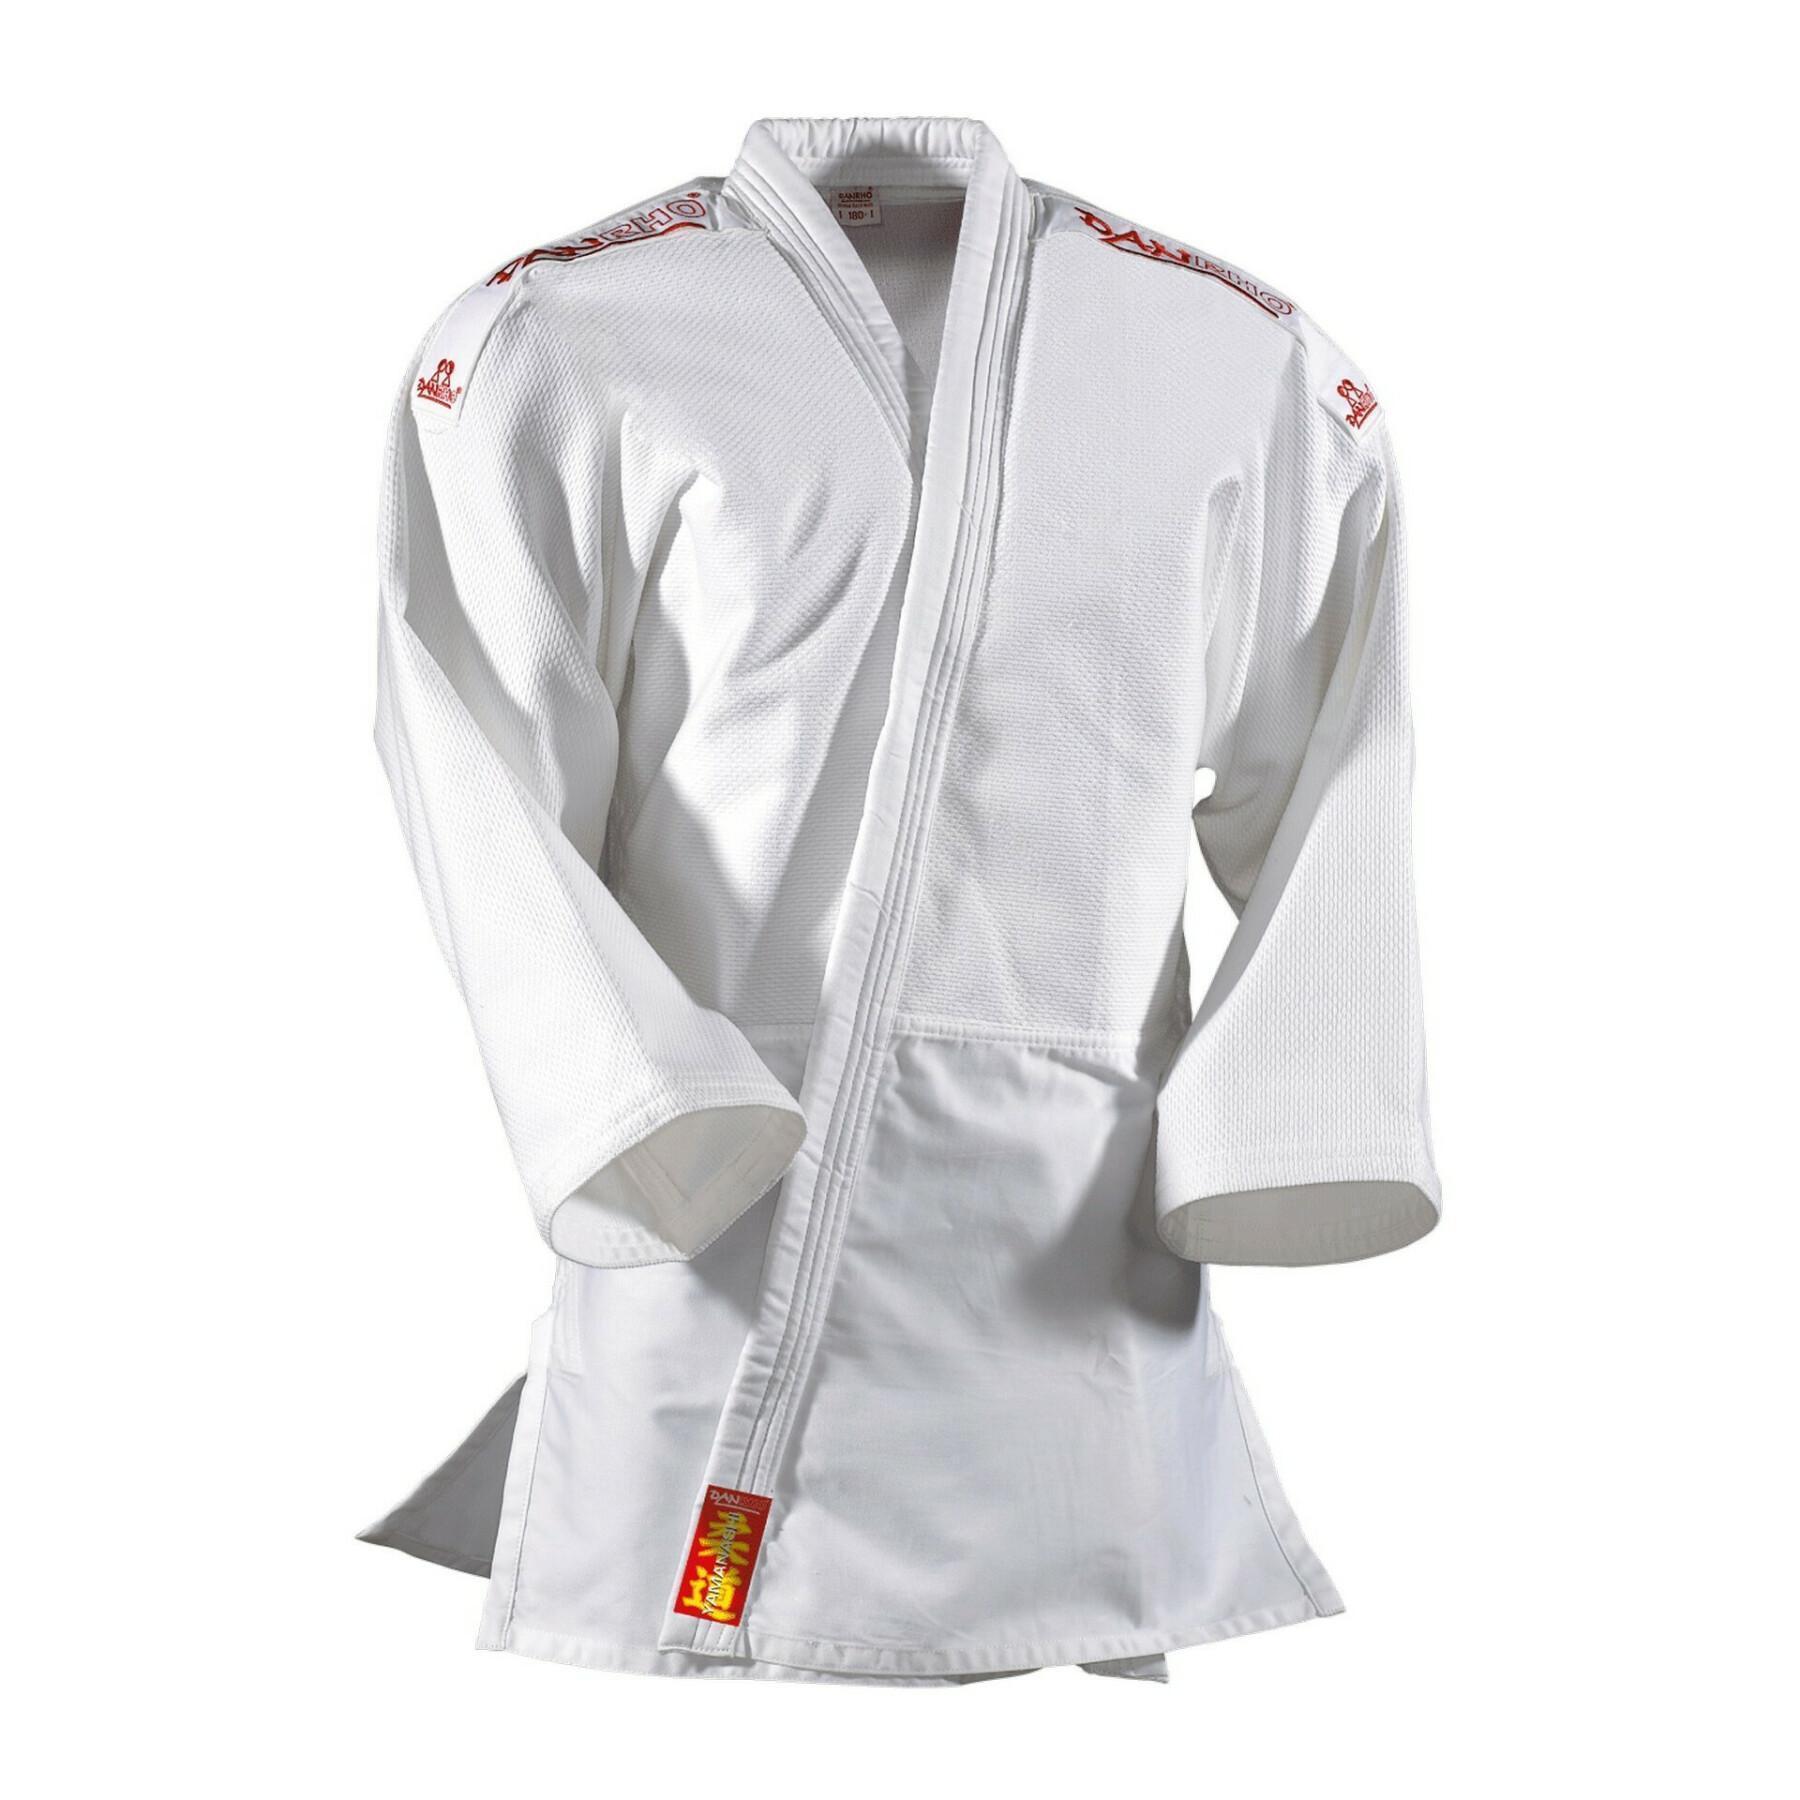 Kimono judo with shoulder stripes Danrho Yamanashi